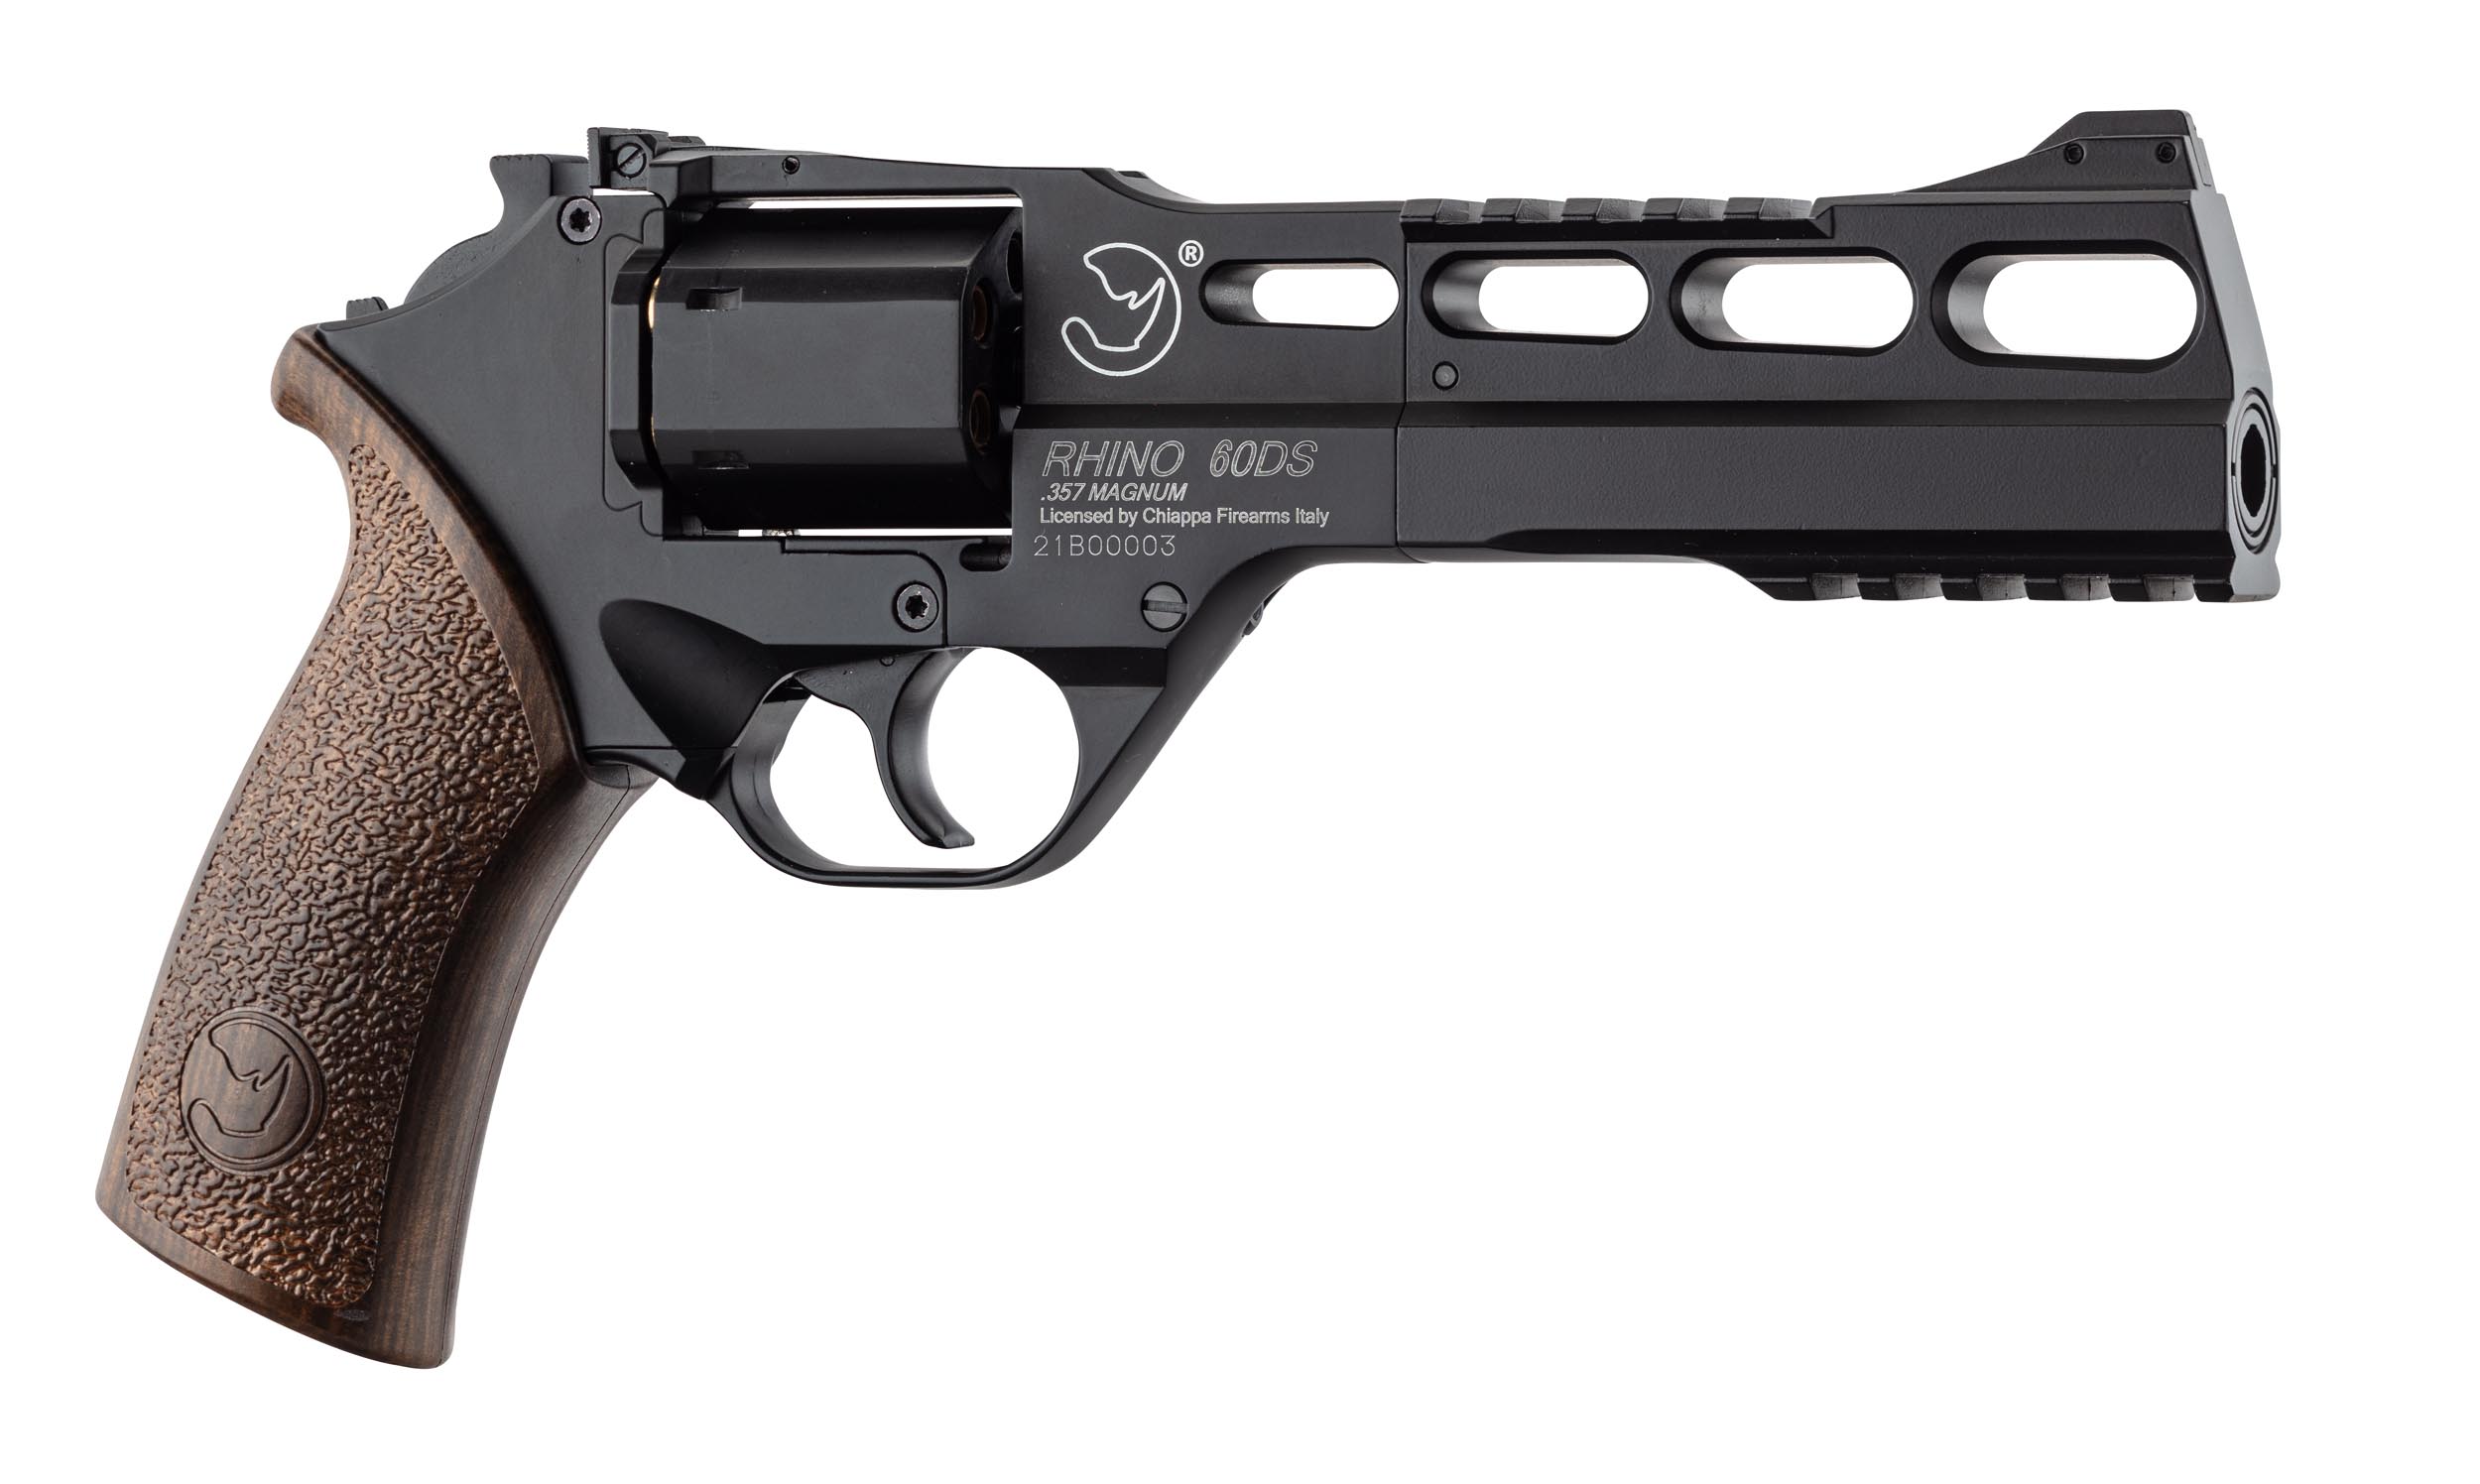 PG1058 Réplique Airsoft revolver CO2 Chiappa Rhino 60DS 0,95J - PG1058